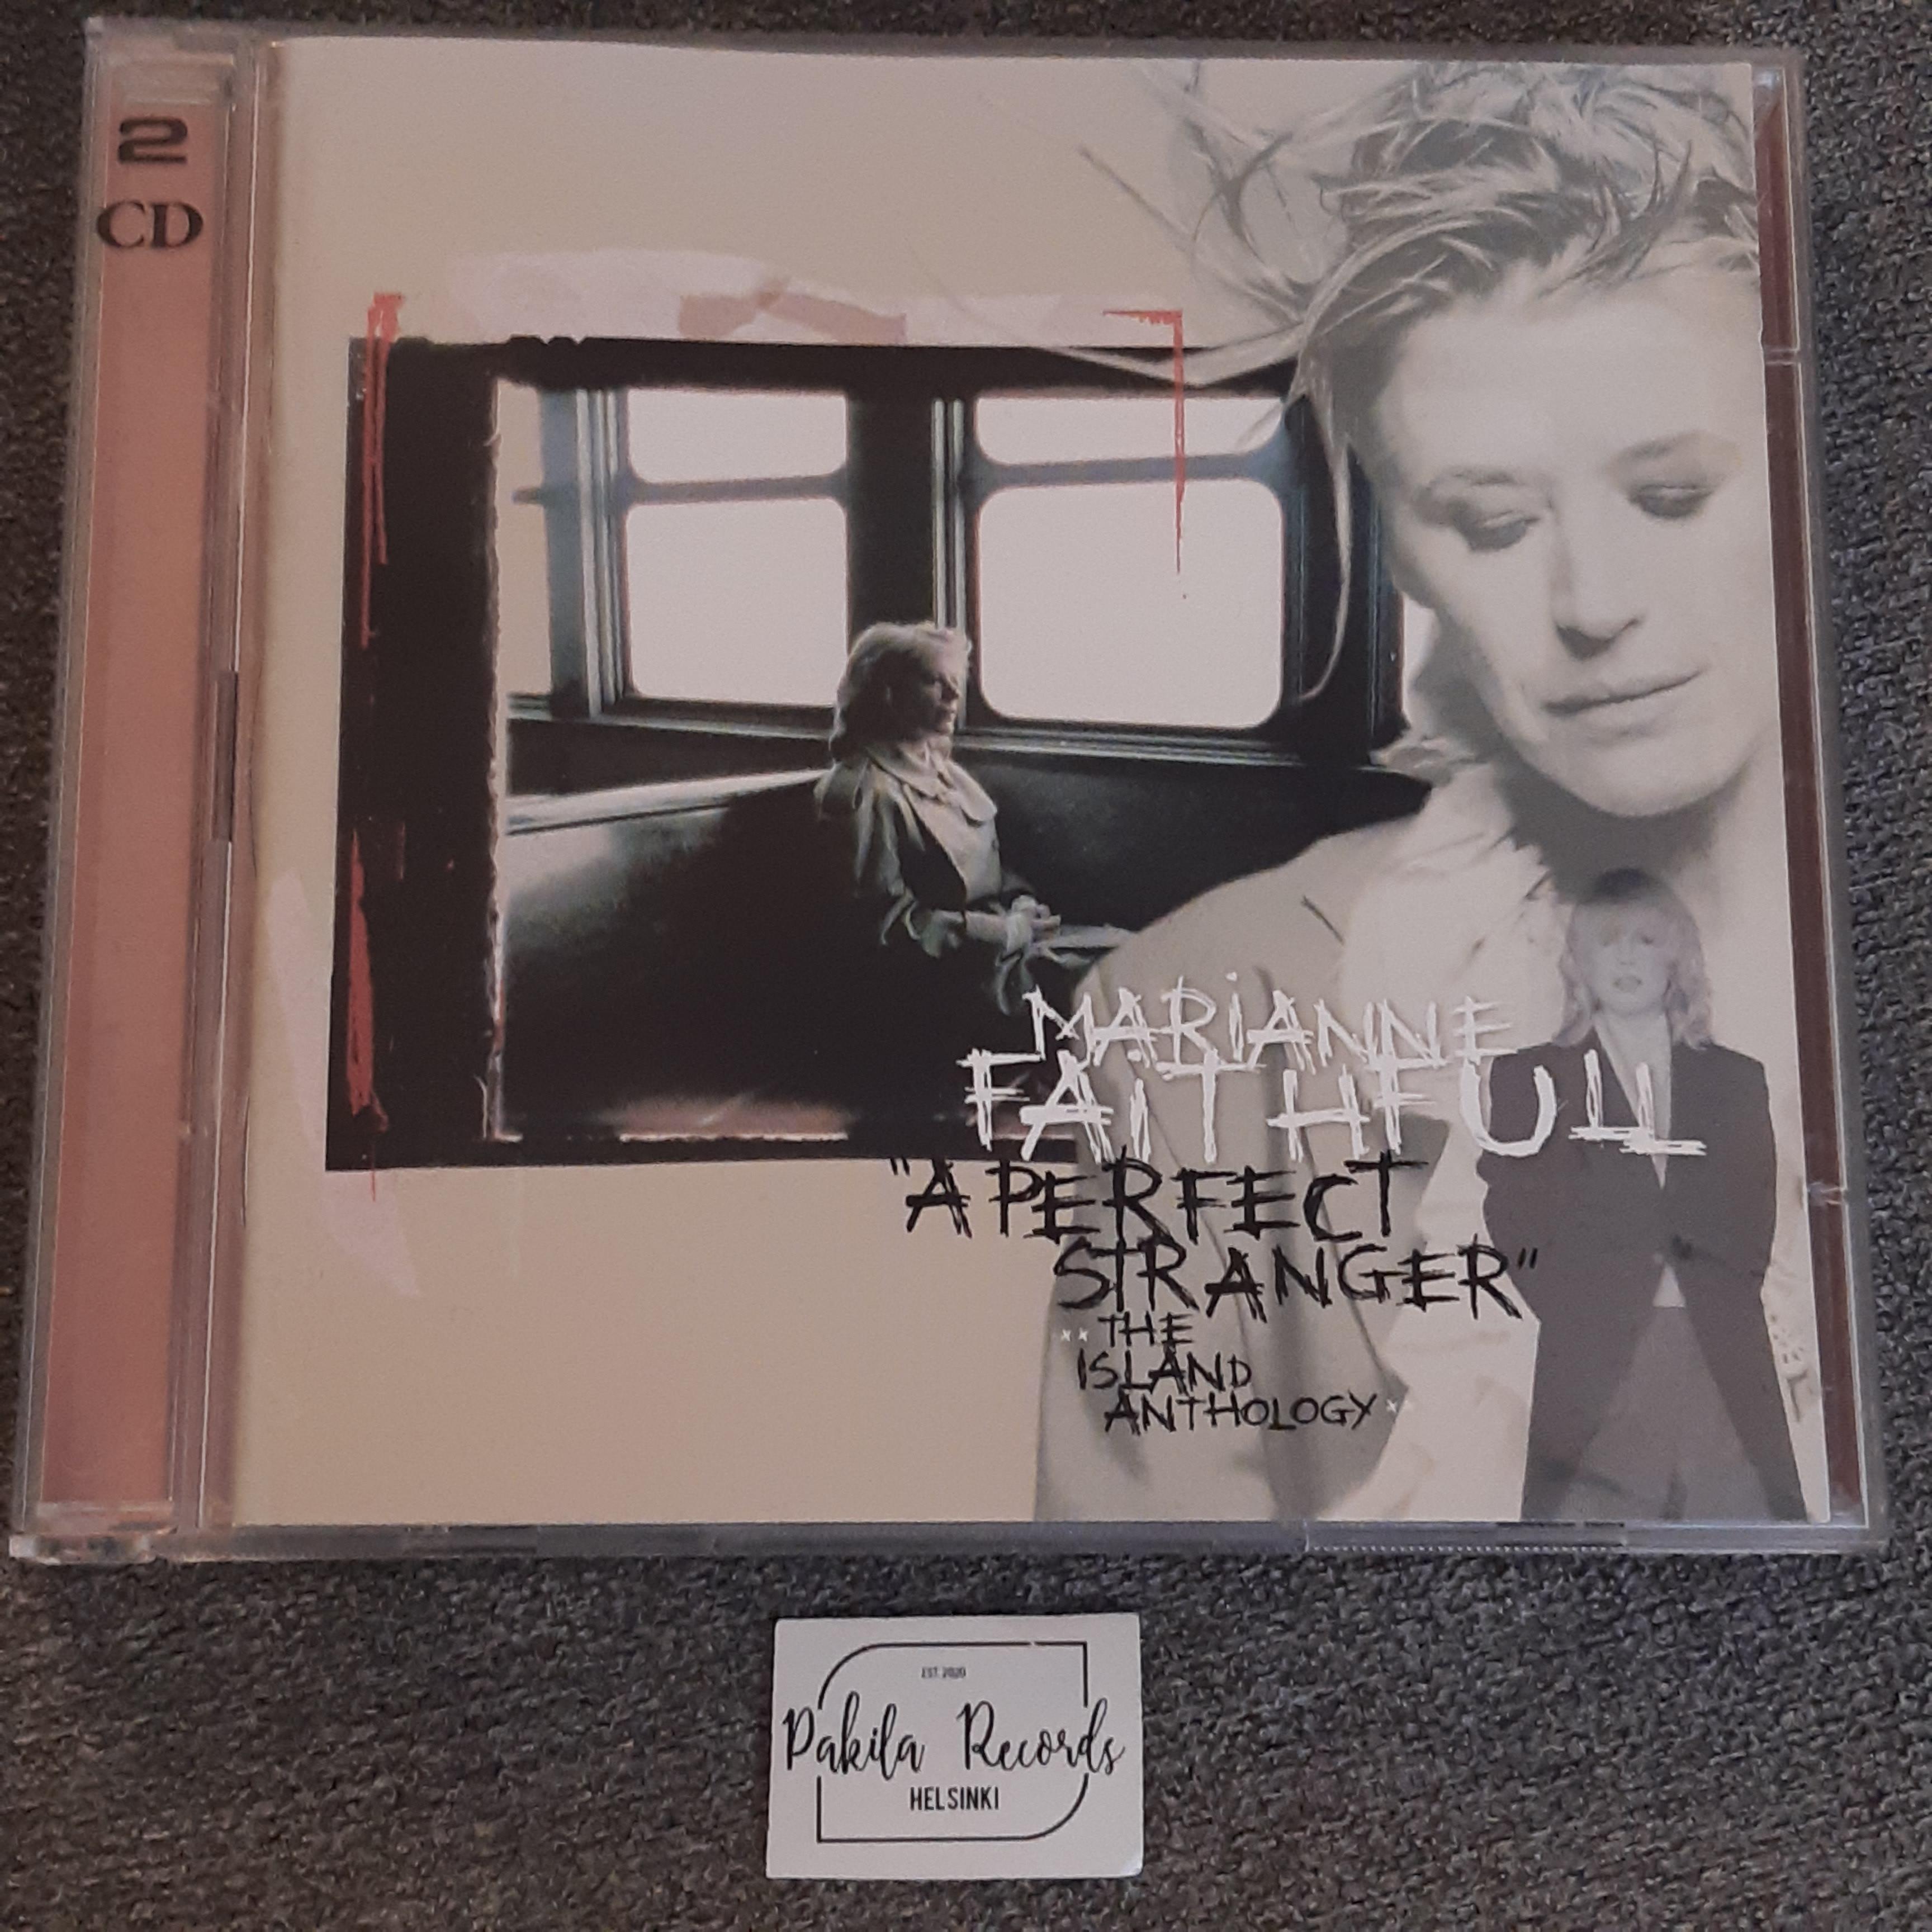 Marianne Faithfull - A Perfect Stranger (The Island Anthology) - 2 CD (käytetty)